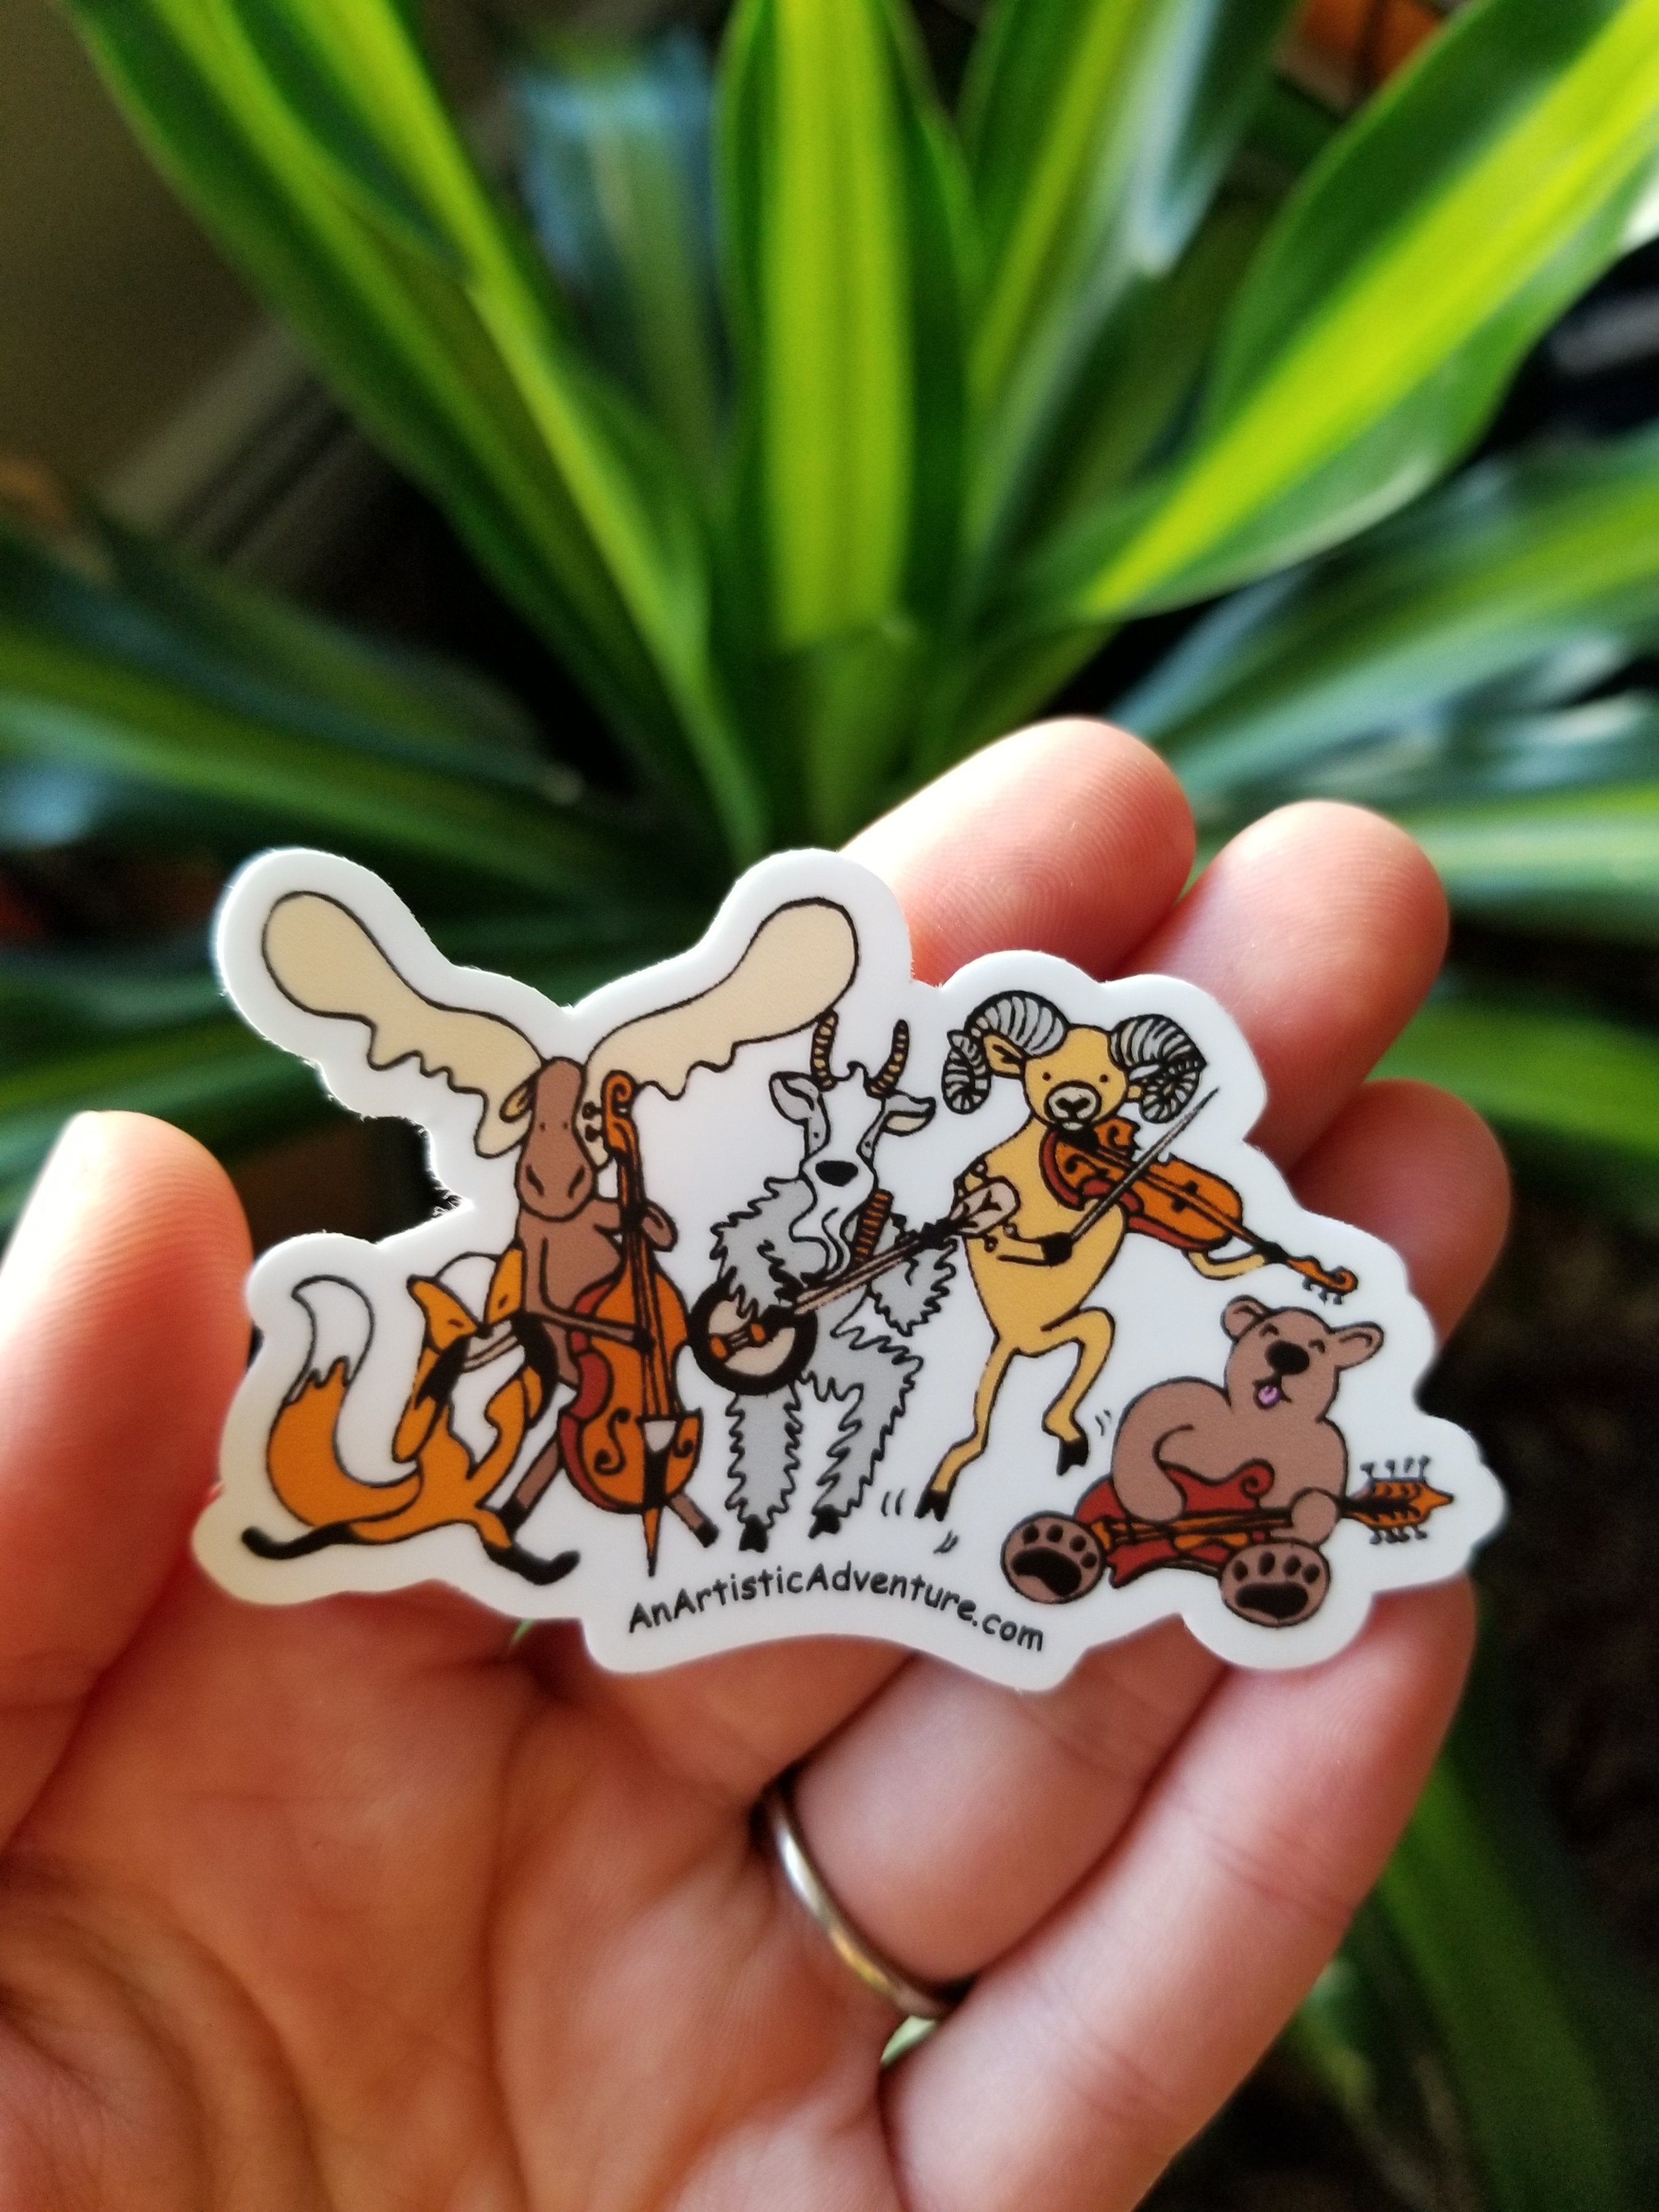 bluegrass-animals-sticker-buy-stickers-from-independent-artists-unique-artisan-stickers.jpg